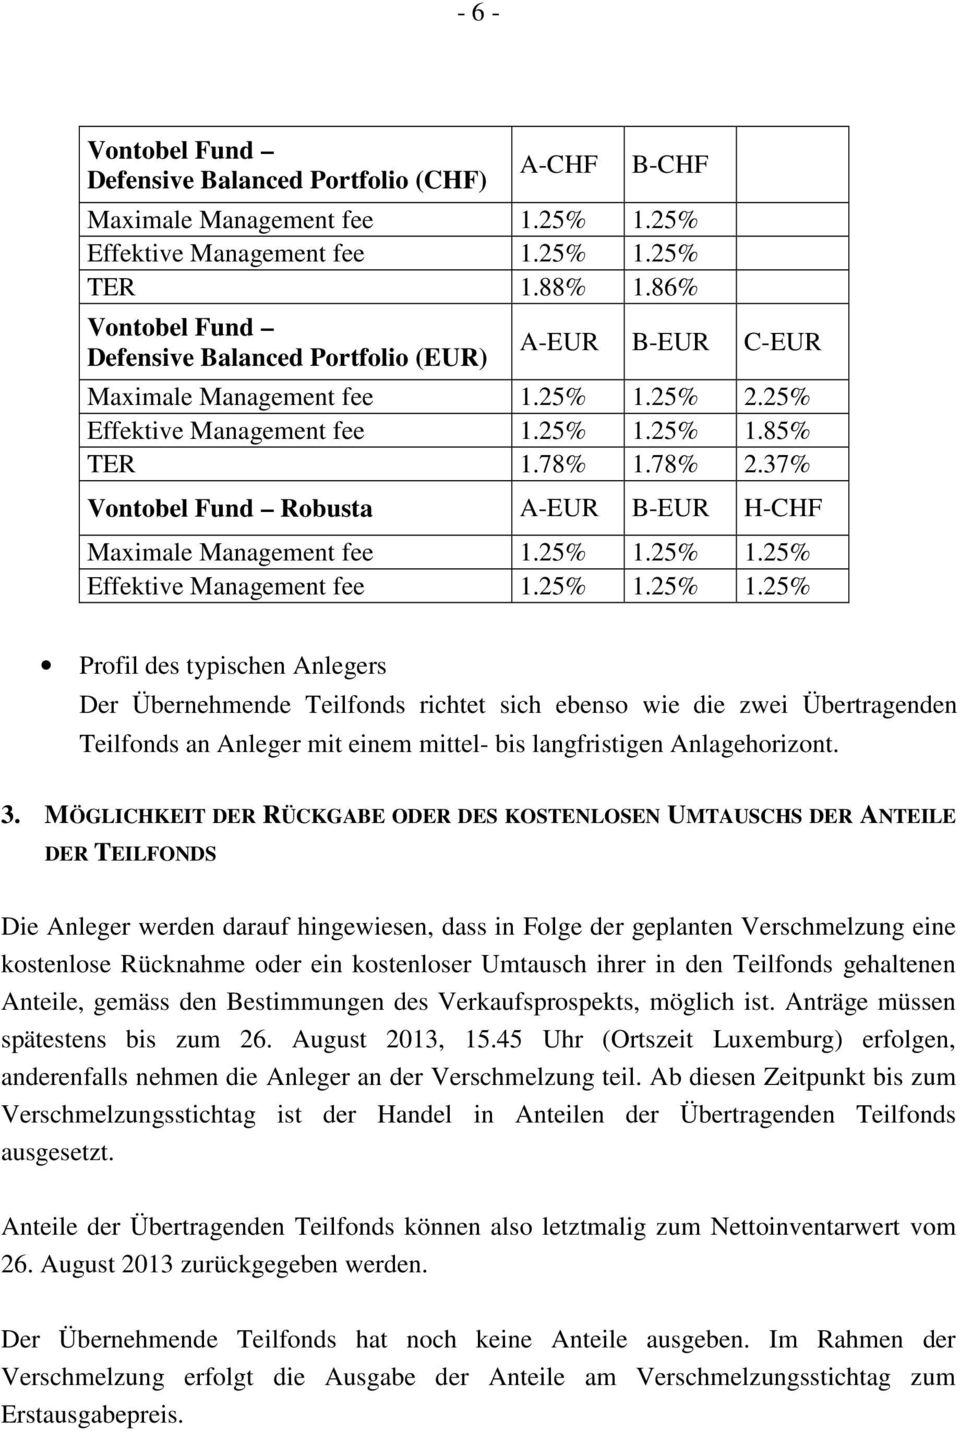 37% Vontobel Fund Robusta A-EUR B-EUR H-CHF Maximale Management fee 1.25% 1.